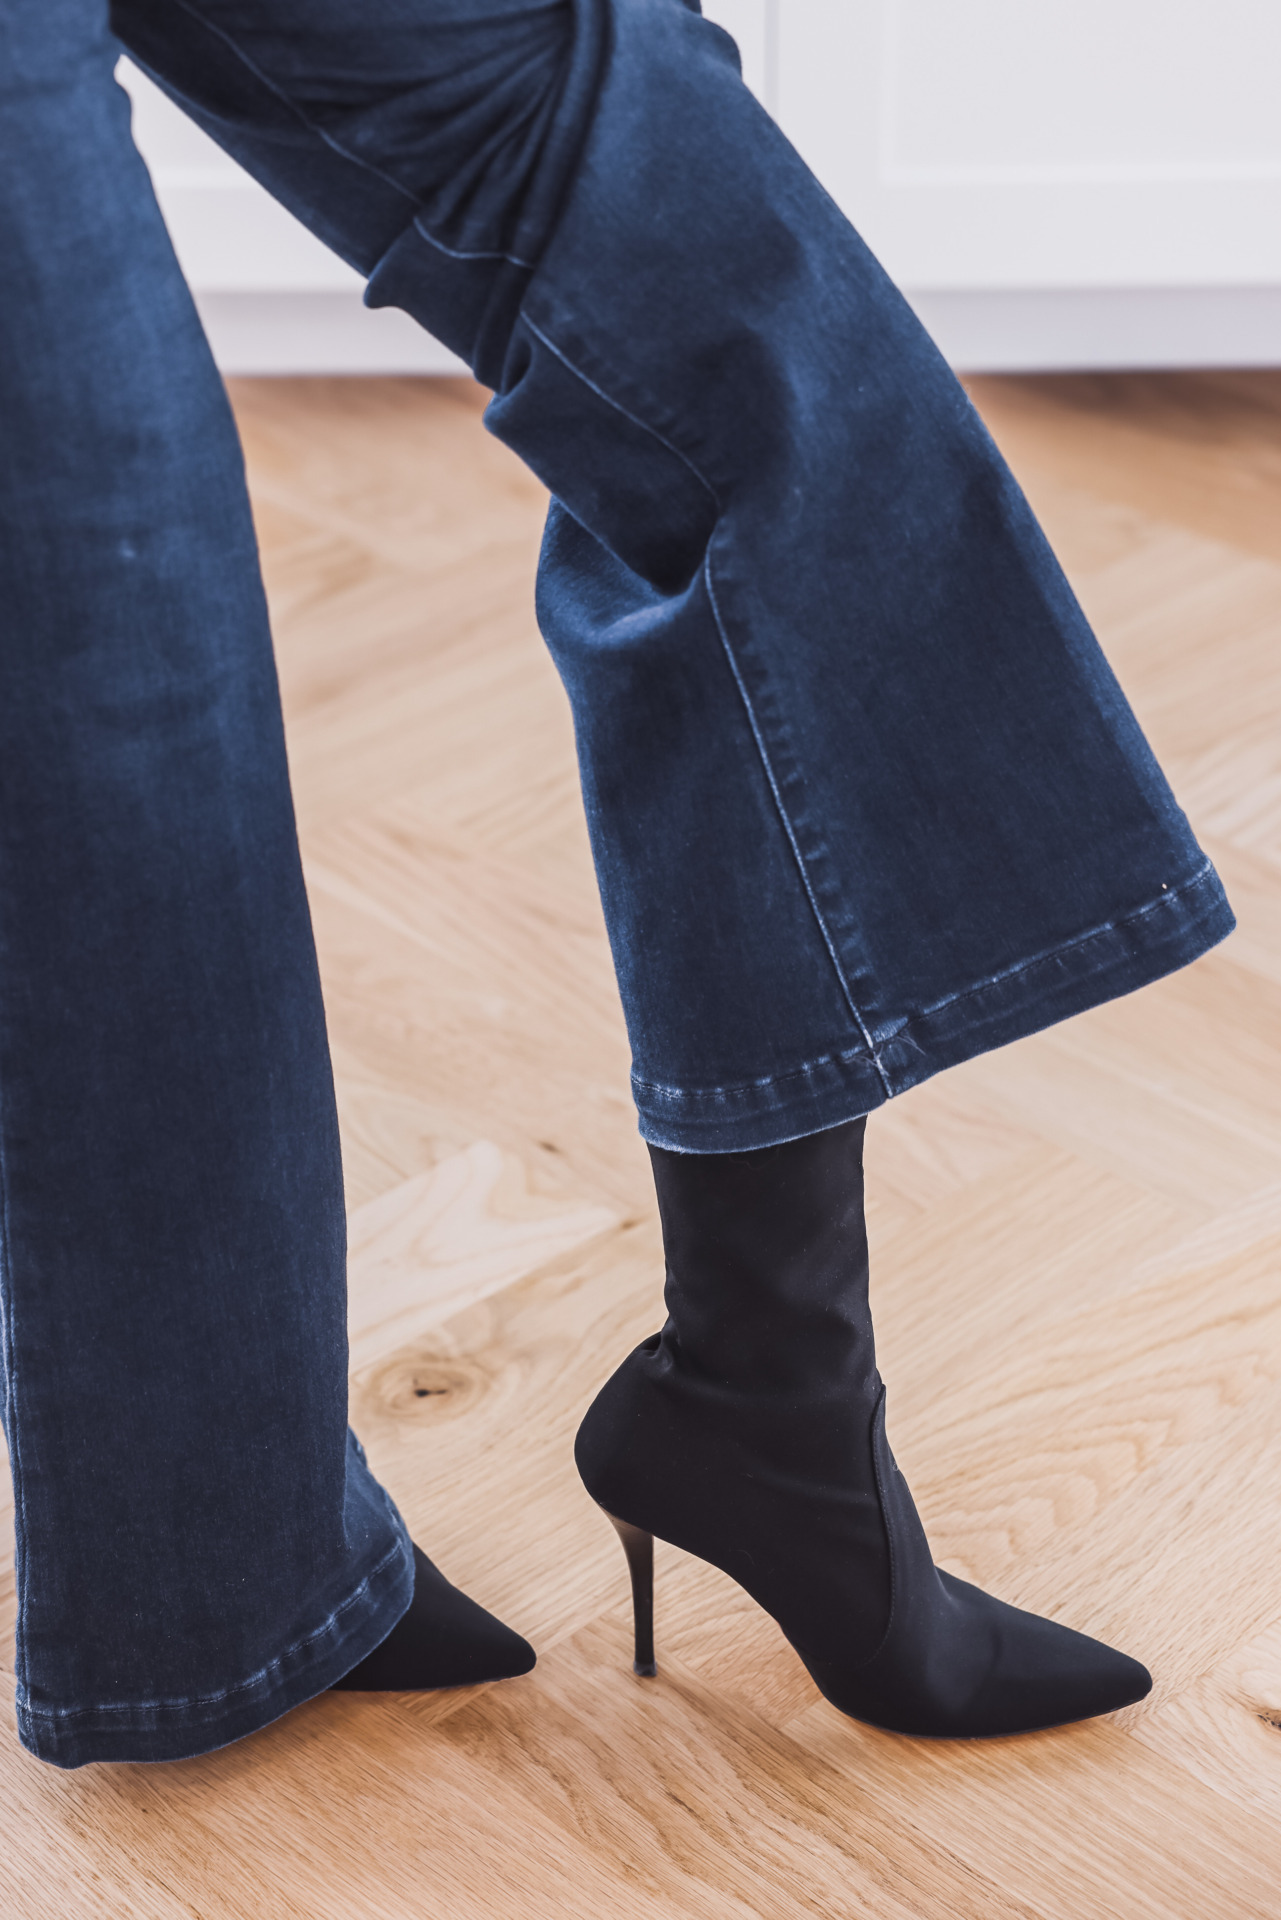 Stuart Weitzman Sock Booties | Fall Fashion Staples